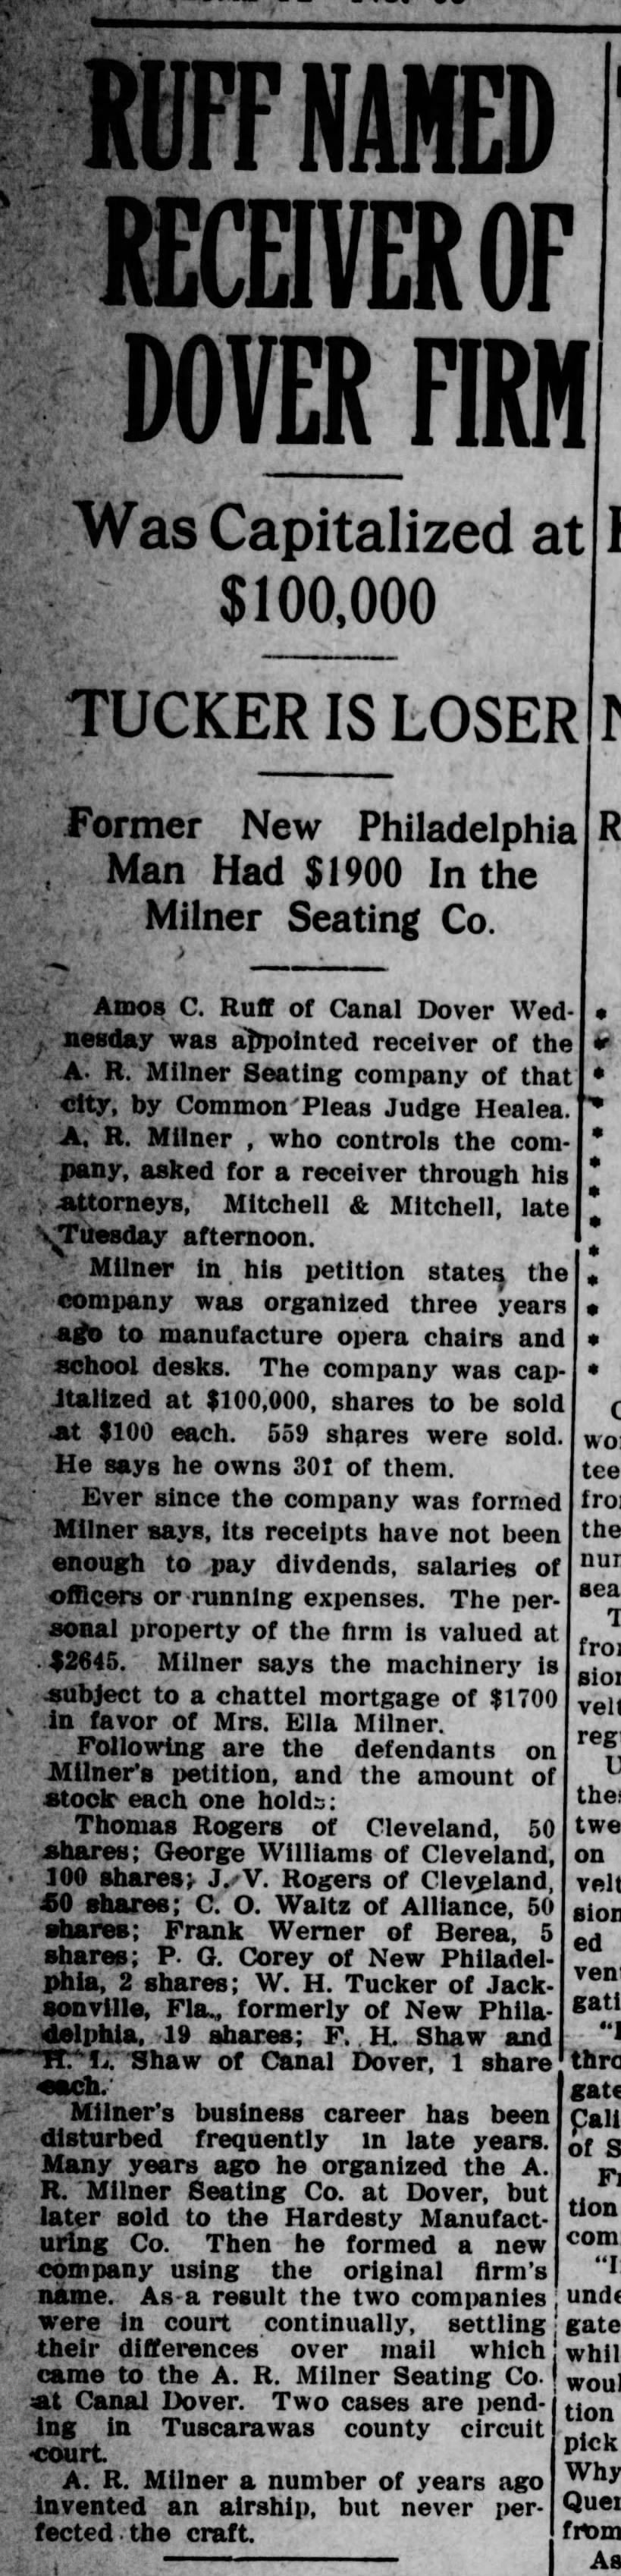 Albert Russel Milner (c1857-1938) firm goes into receivership